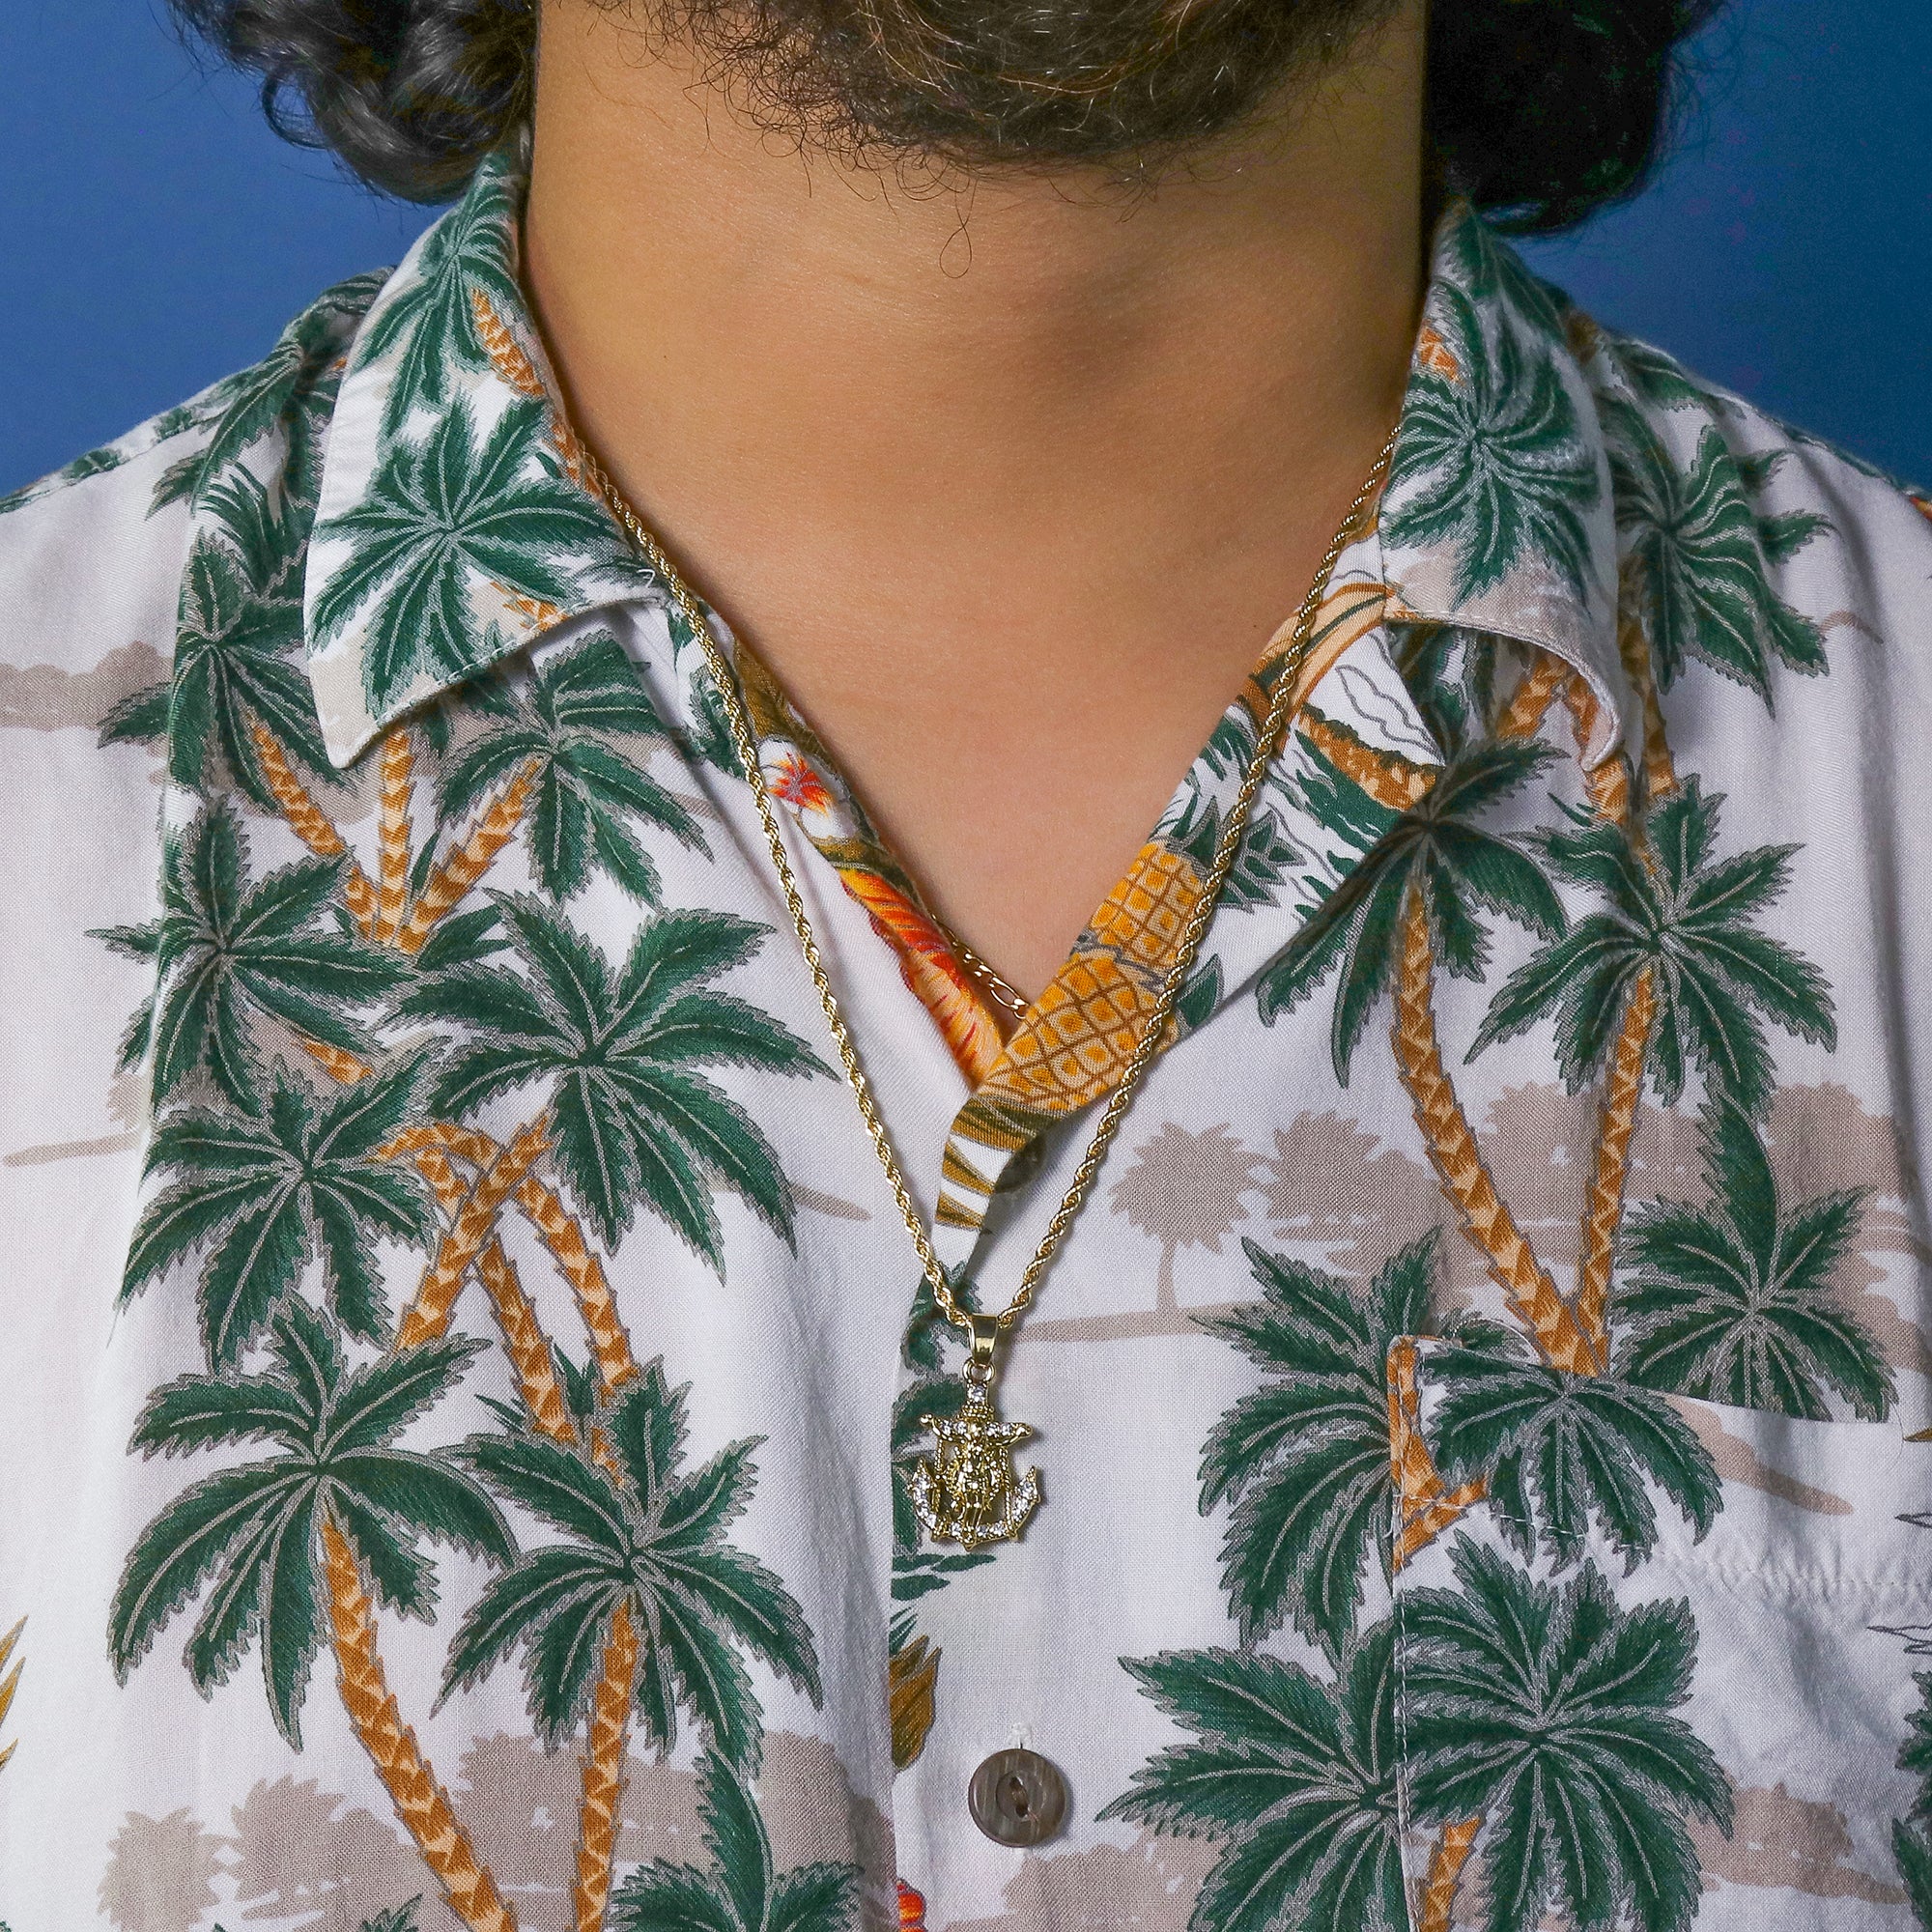 Micro Cz Jesus Anchor Pendant Rope Chain Men's Hip Hop 18k Cz Jewelry Necklace Choker